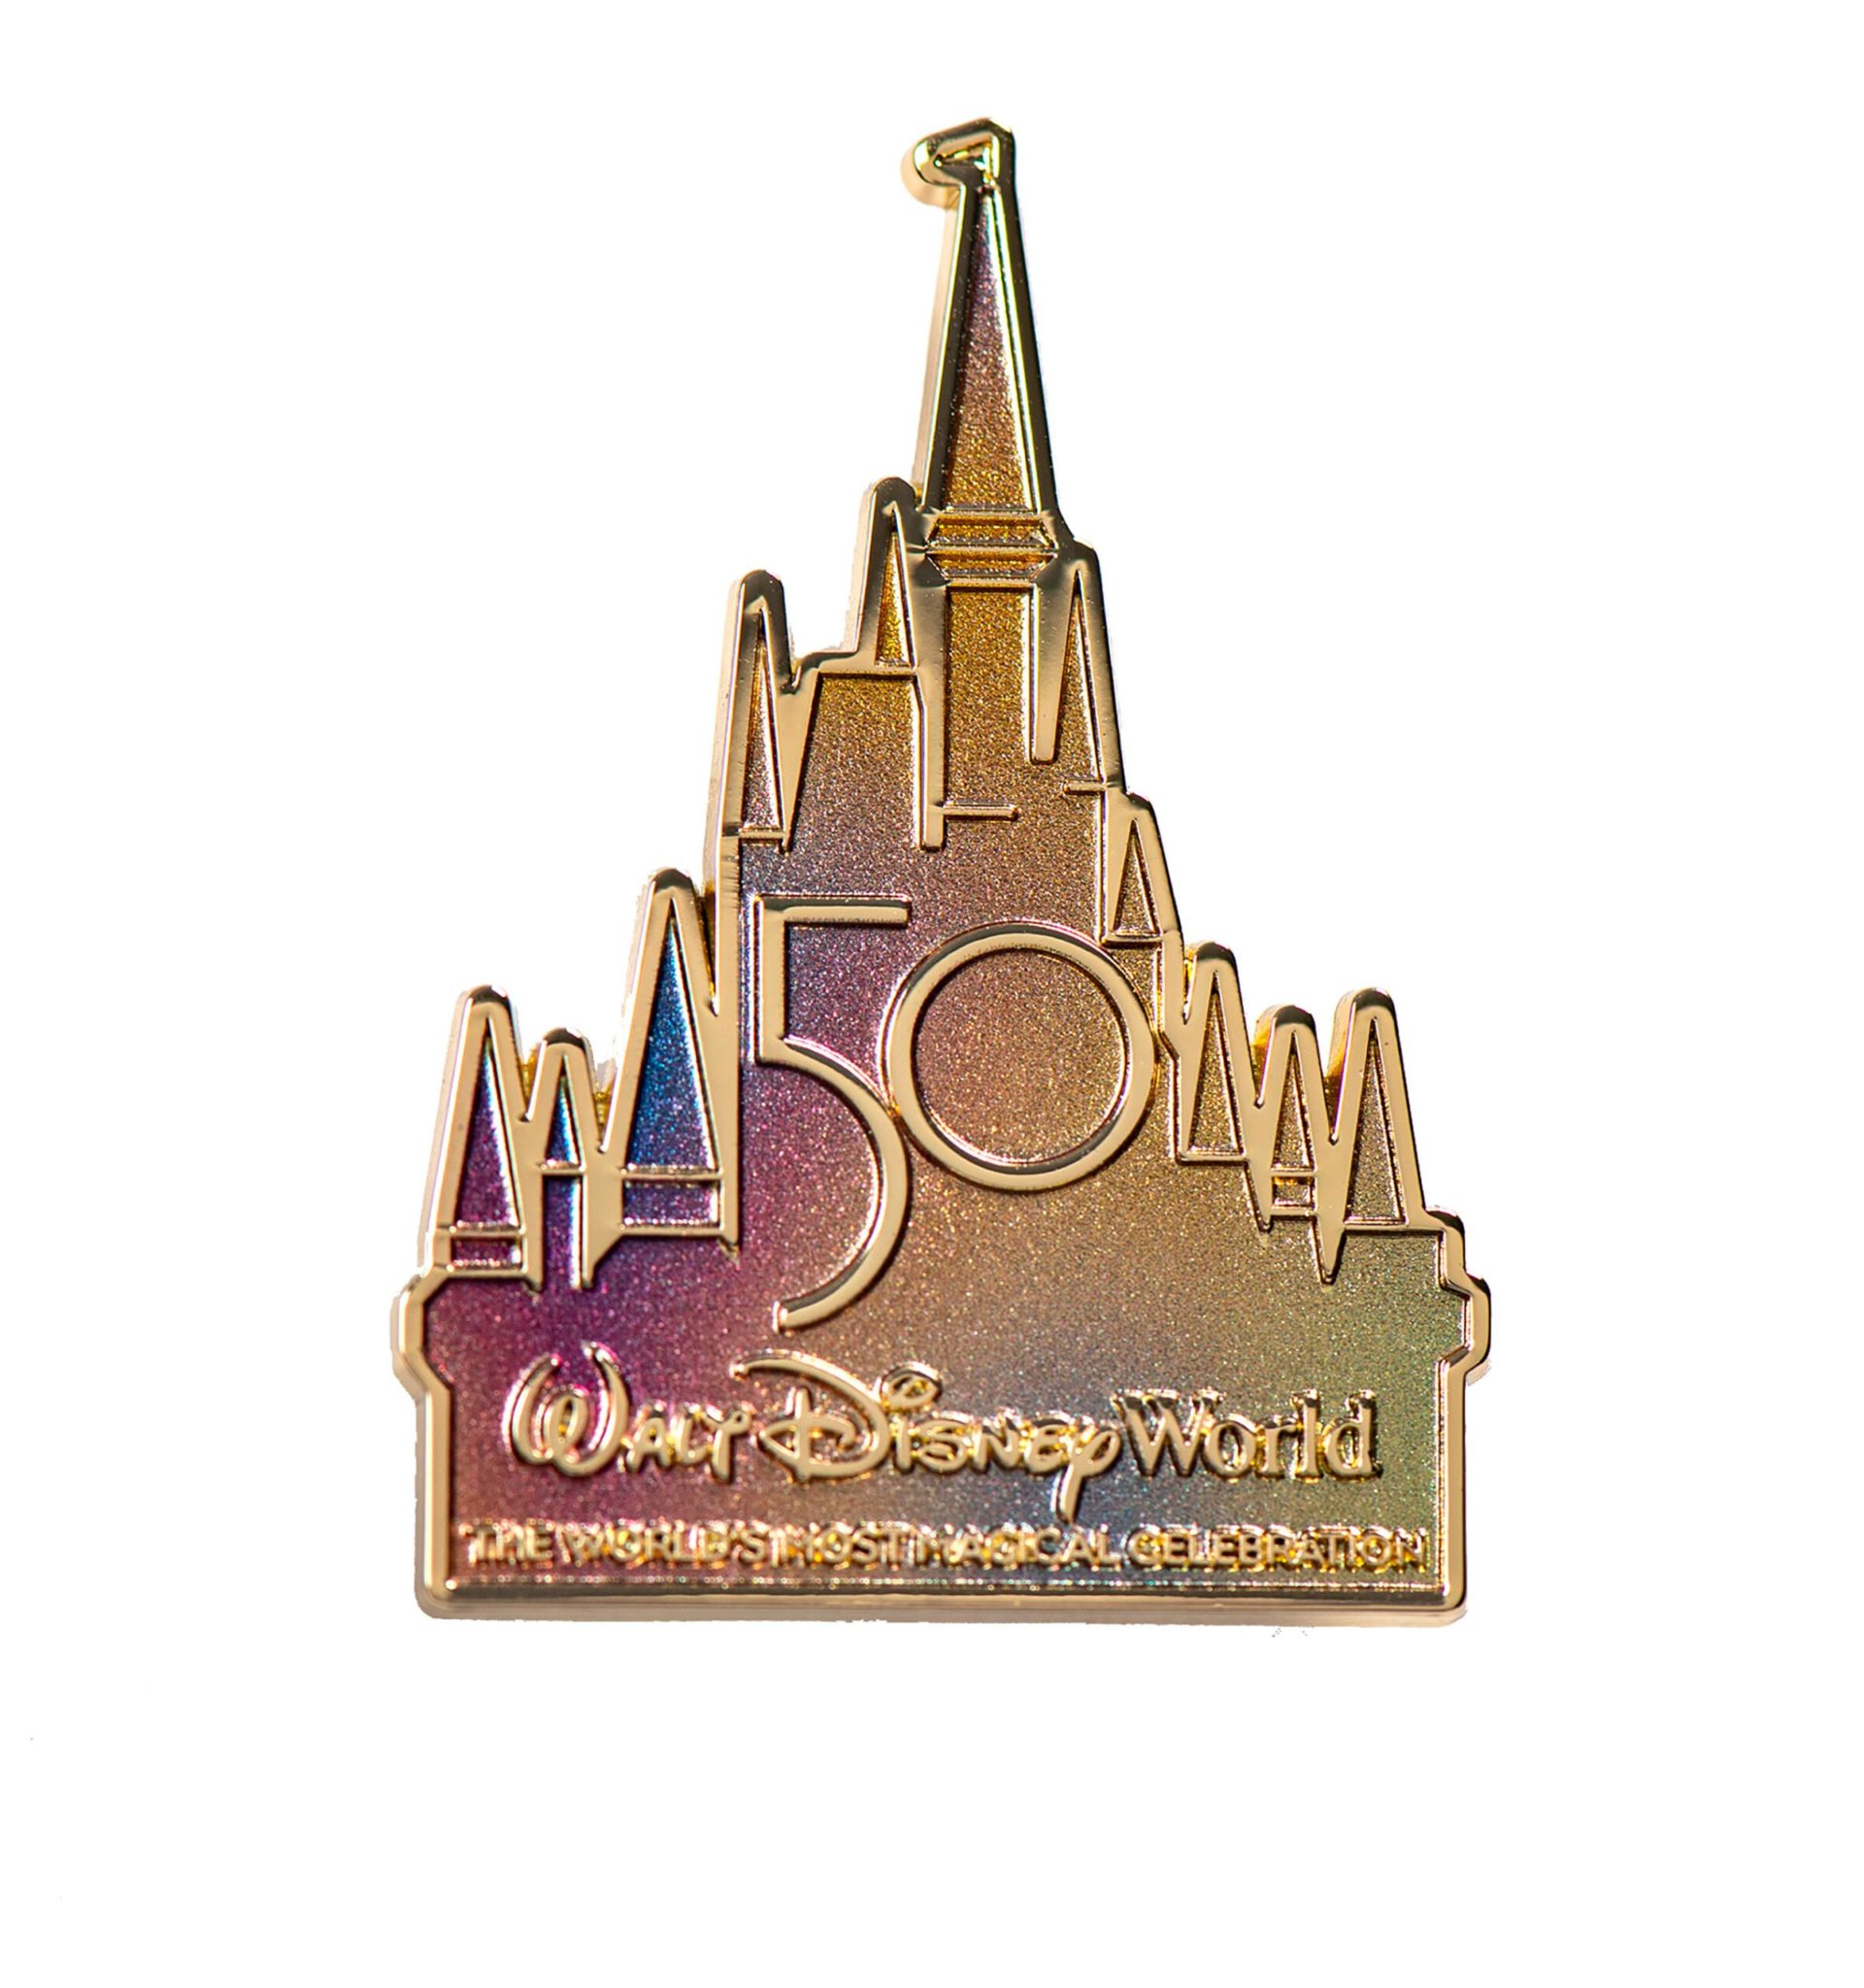 Disney World’s 50th Anniversary Merchandise Revealed